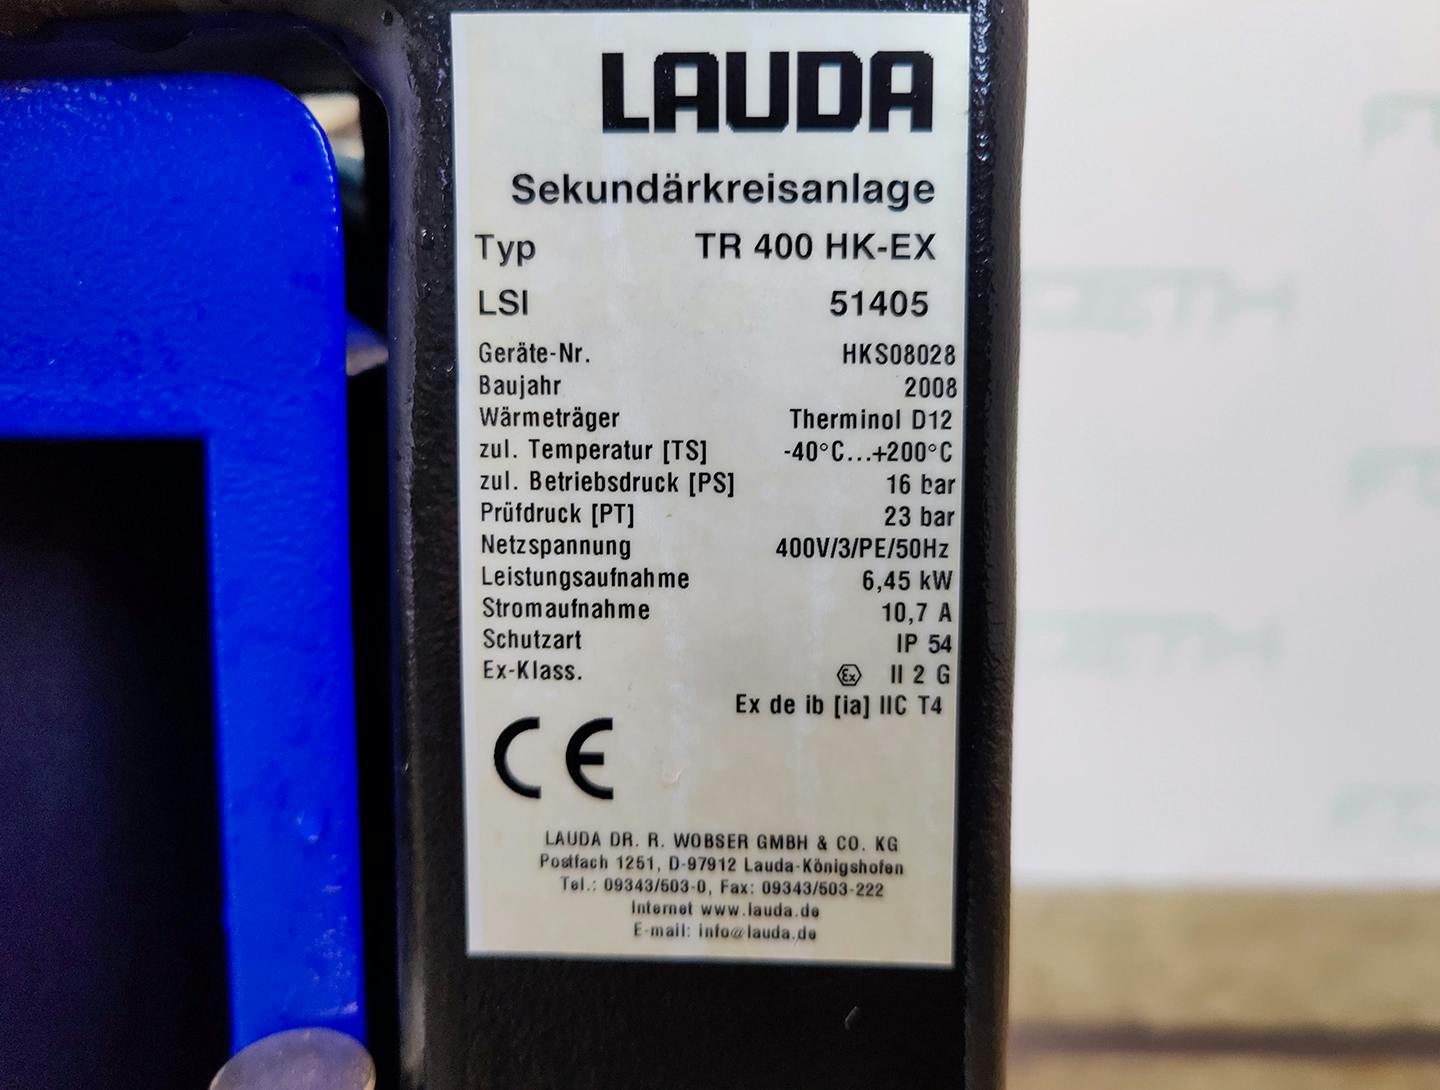 Lauda TR400 HK-EX "secondary circuit system" - Chladic recirkulacní - image 6